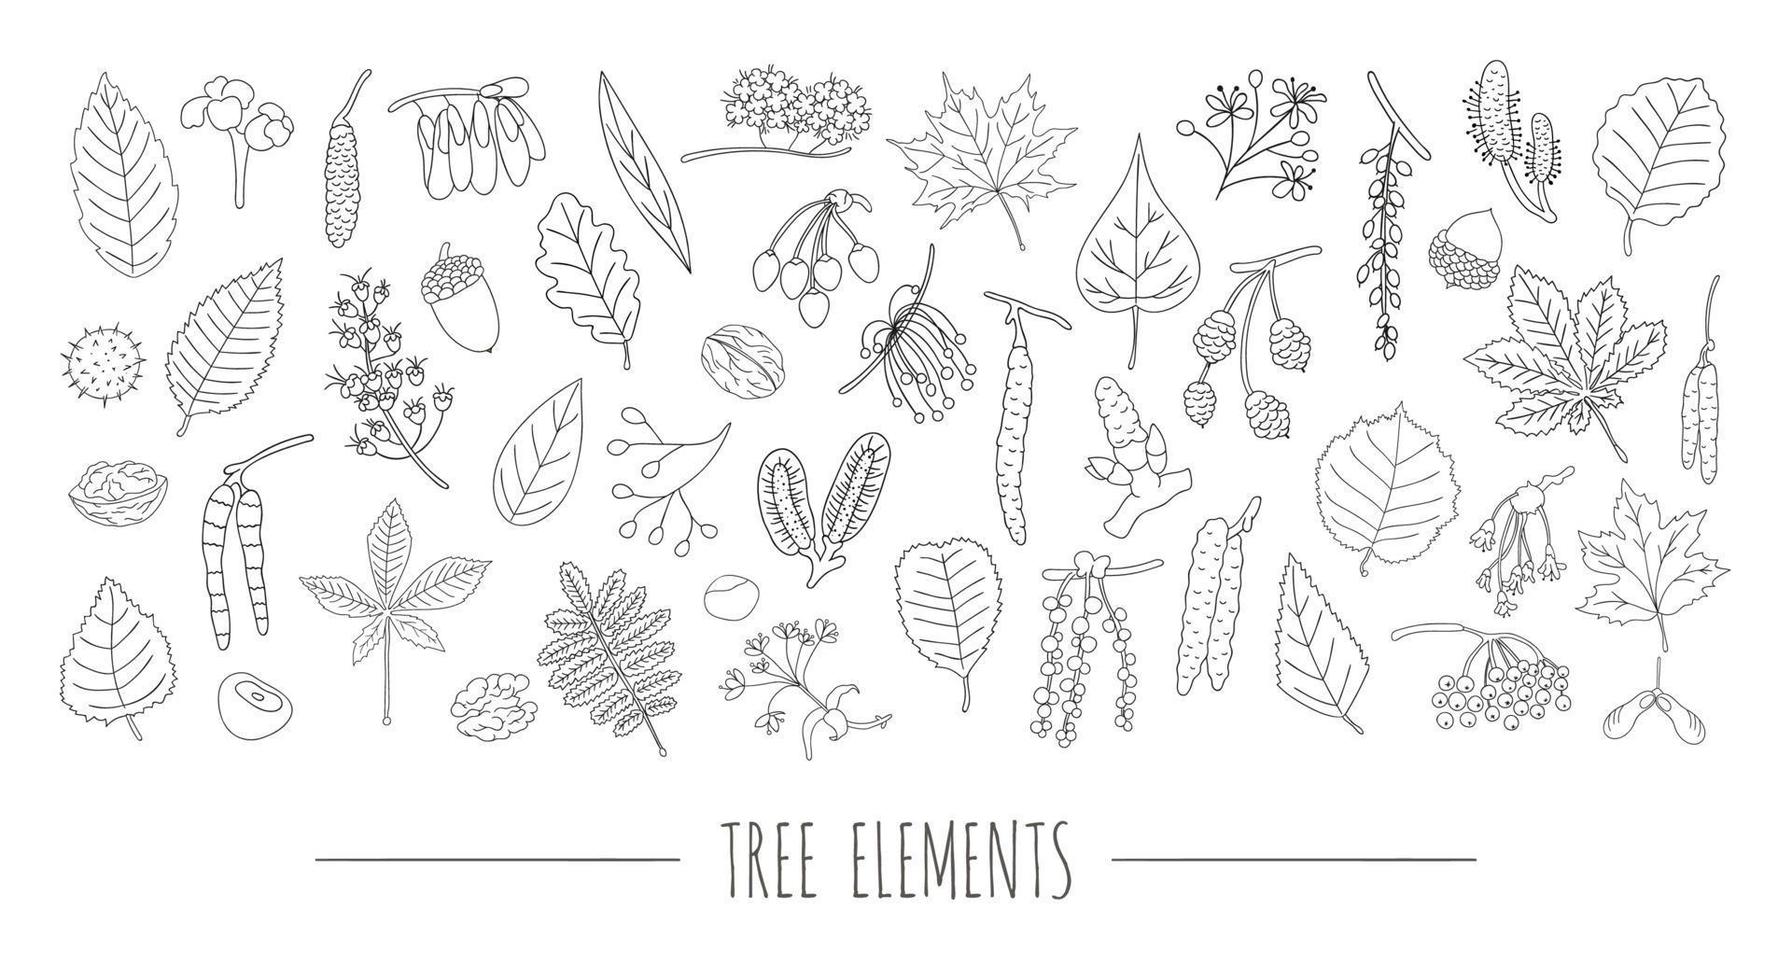 Vector set of black and white tree elements isolated on white background. Colorful pack of birch, maple, oak, rowan, chestnut, hazel, linden, alder, aspen, elm, poplar leaves